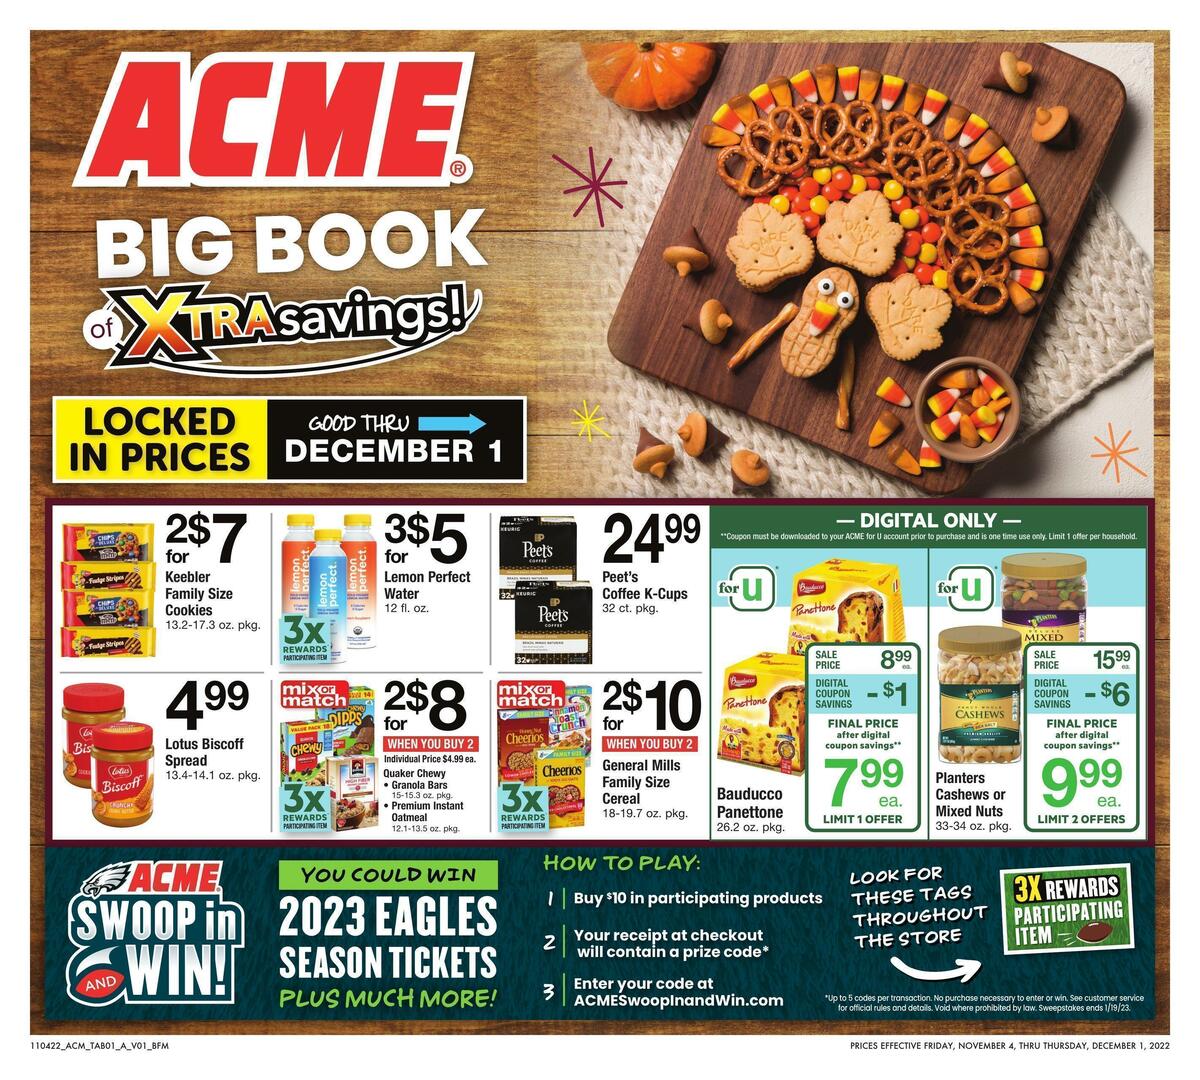 ACME Markets Big Book of Savings Weekly Ad from November 4